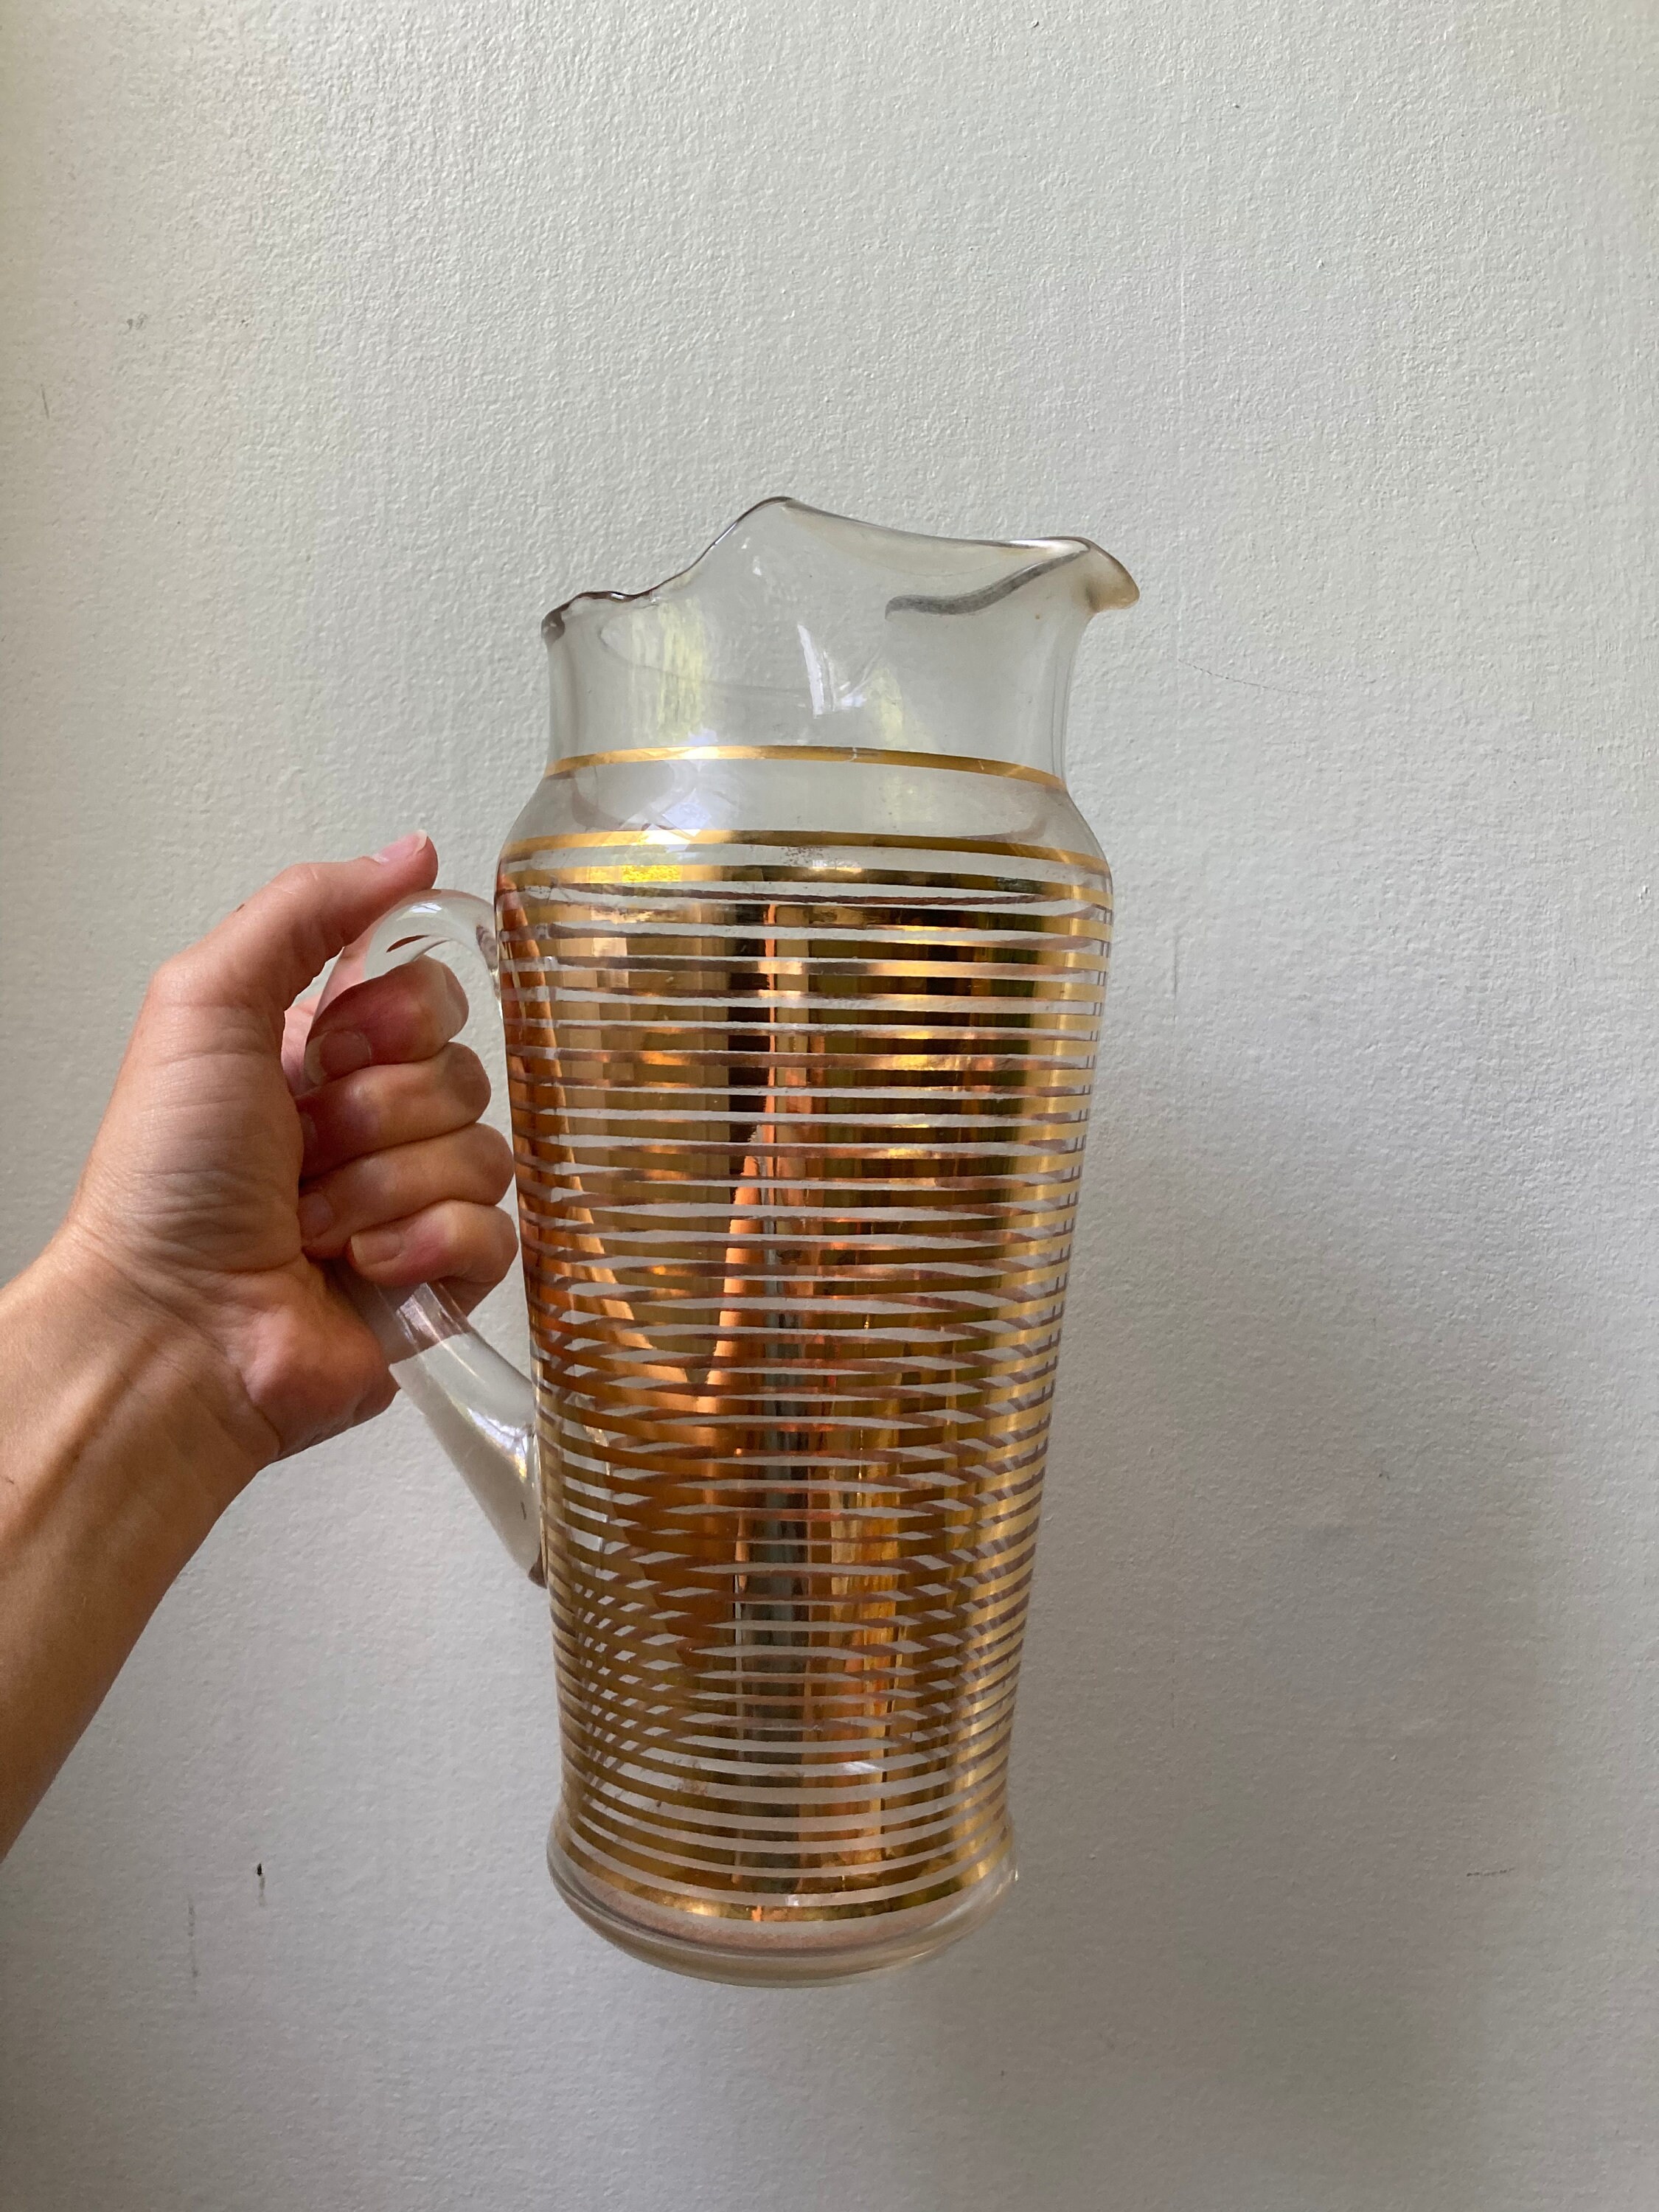 Amber Glass Pitcher Tumbler Set Vintage Gold Stripe Iced Tea Set